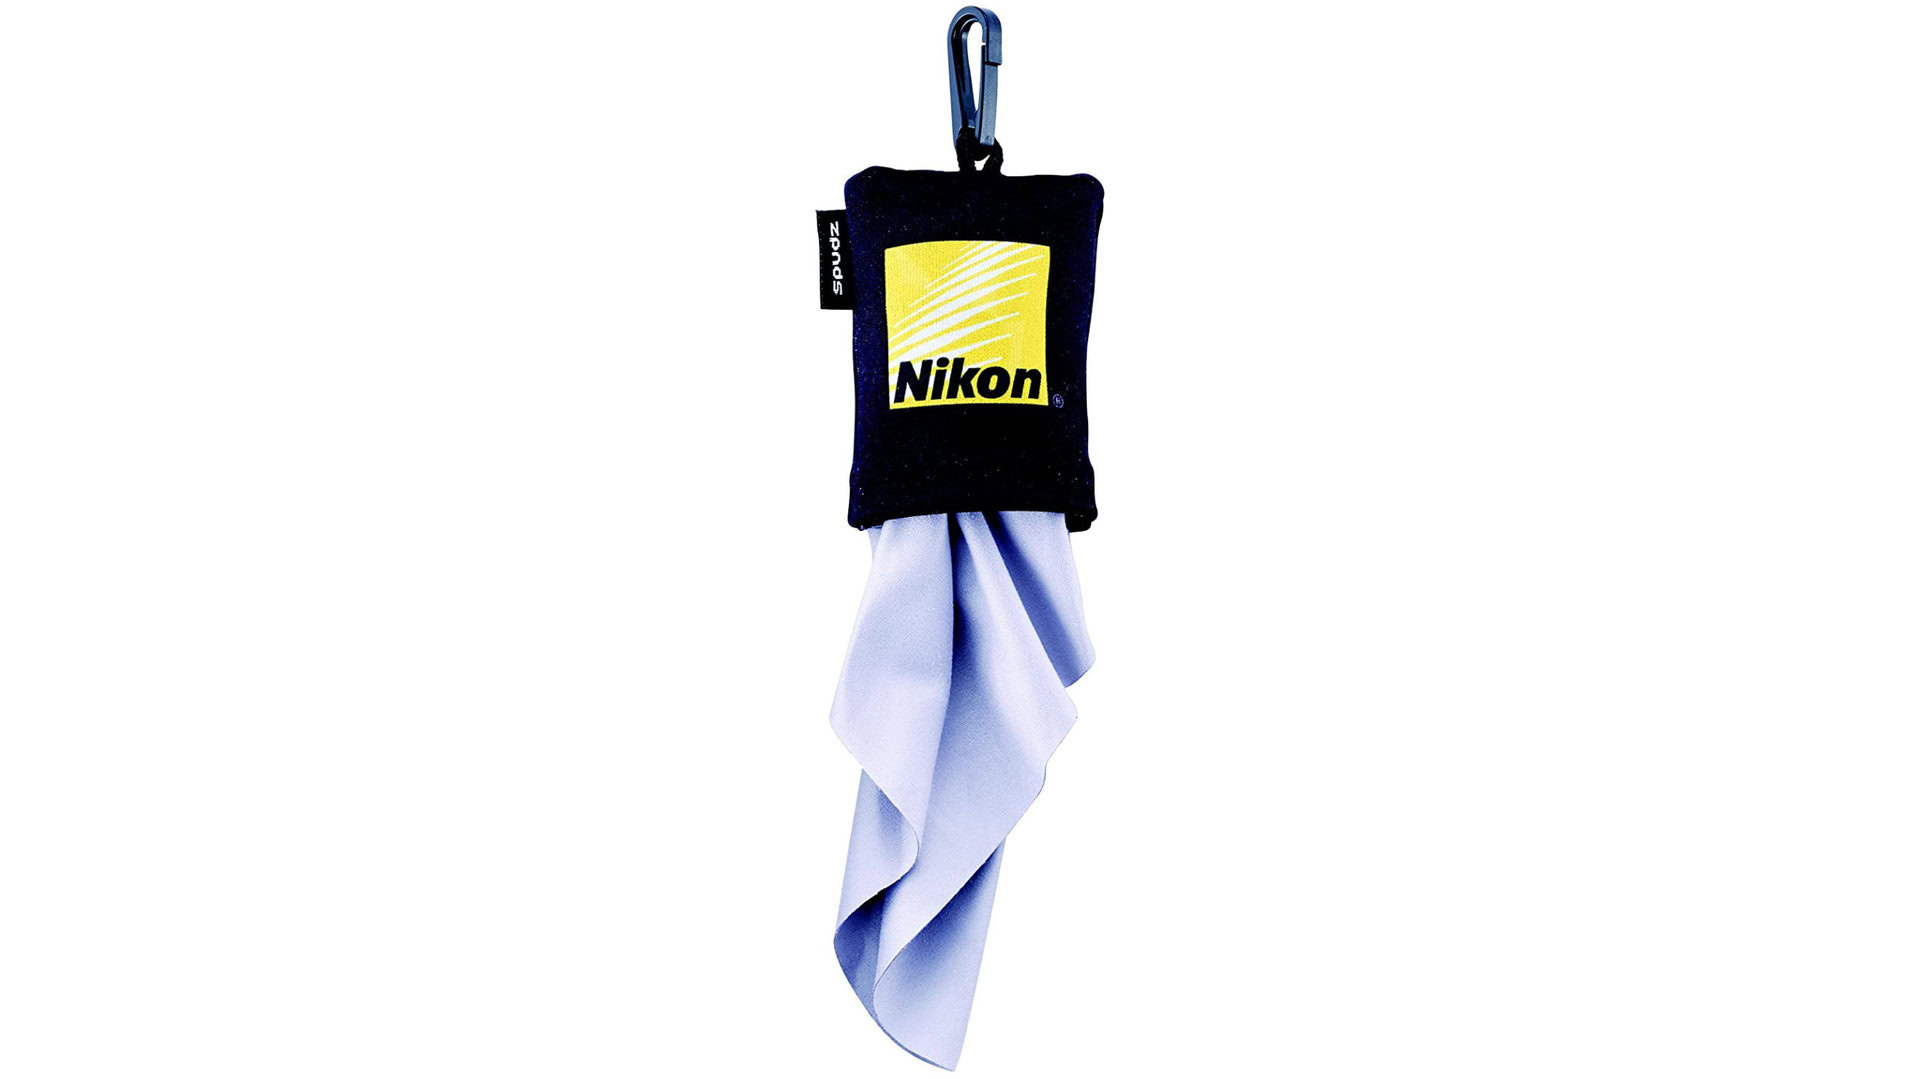 Nikon microfiber cloth